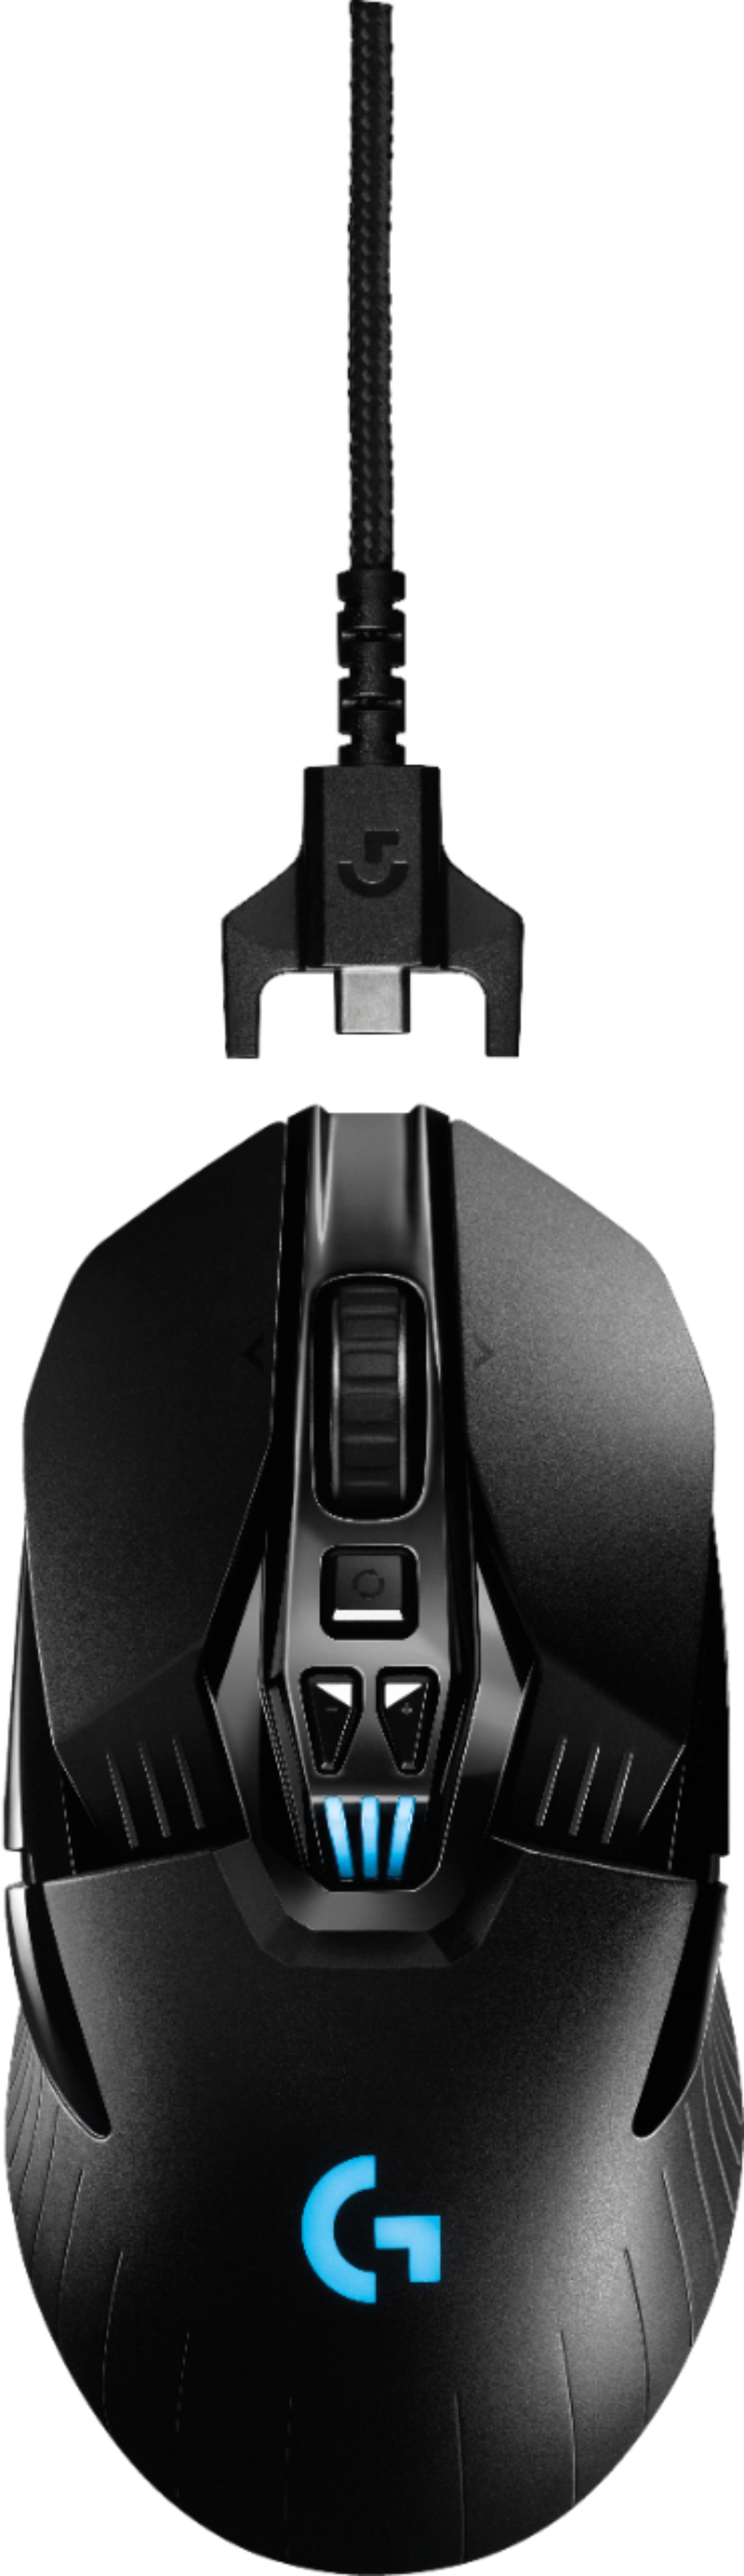 Best Buy: Logitech SE Wireless Optical Gaming Mouse Black 910-005755